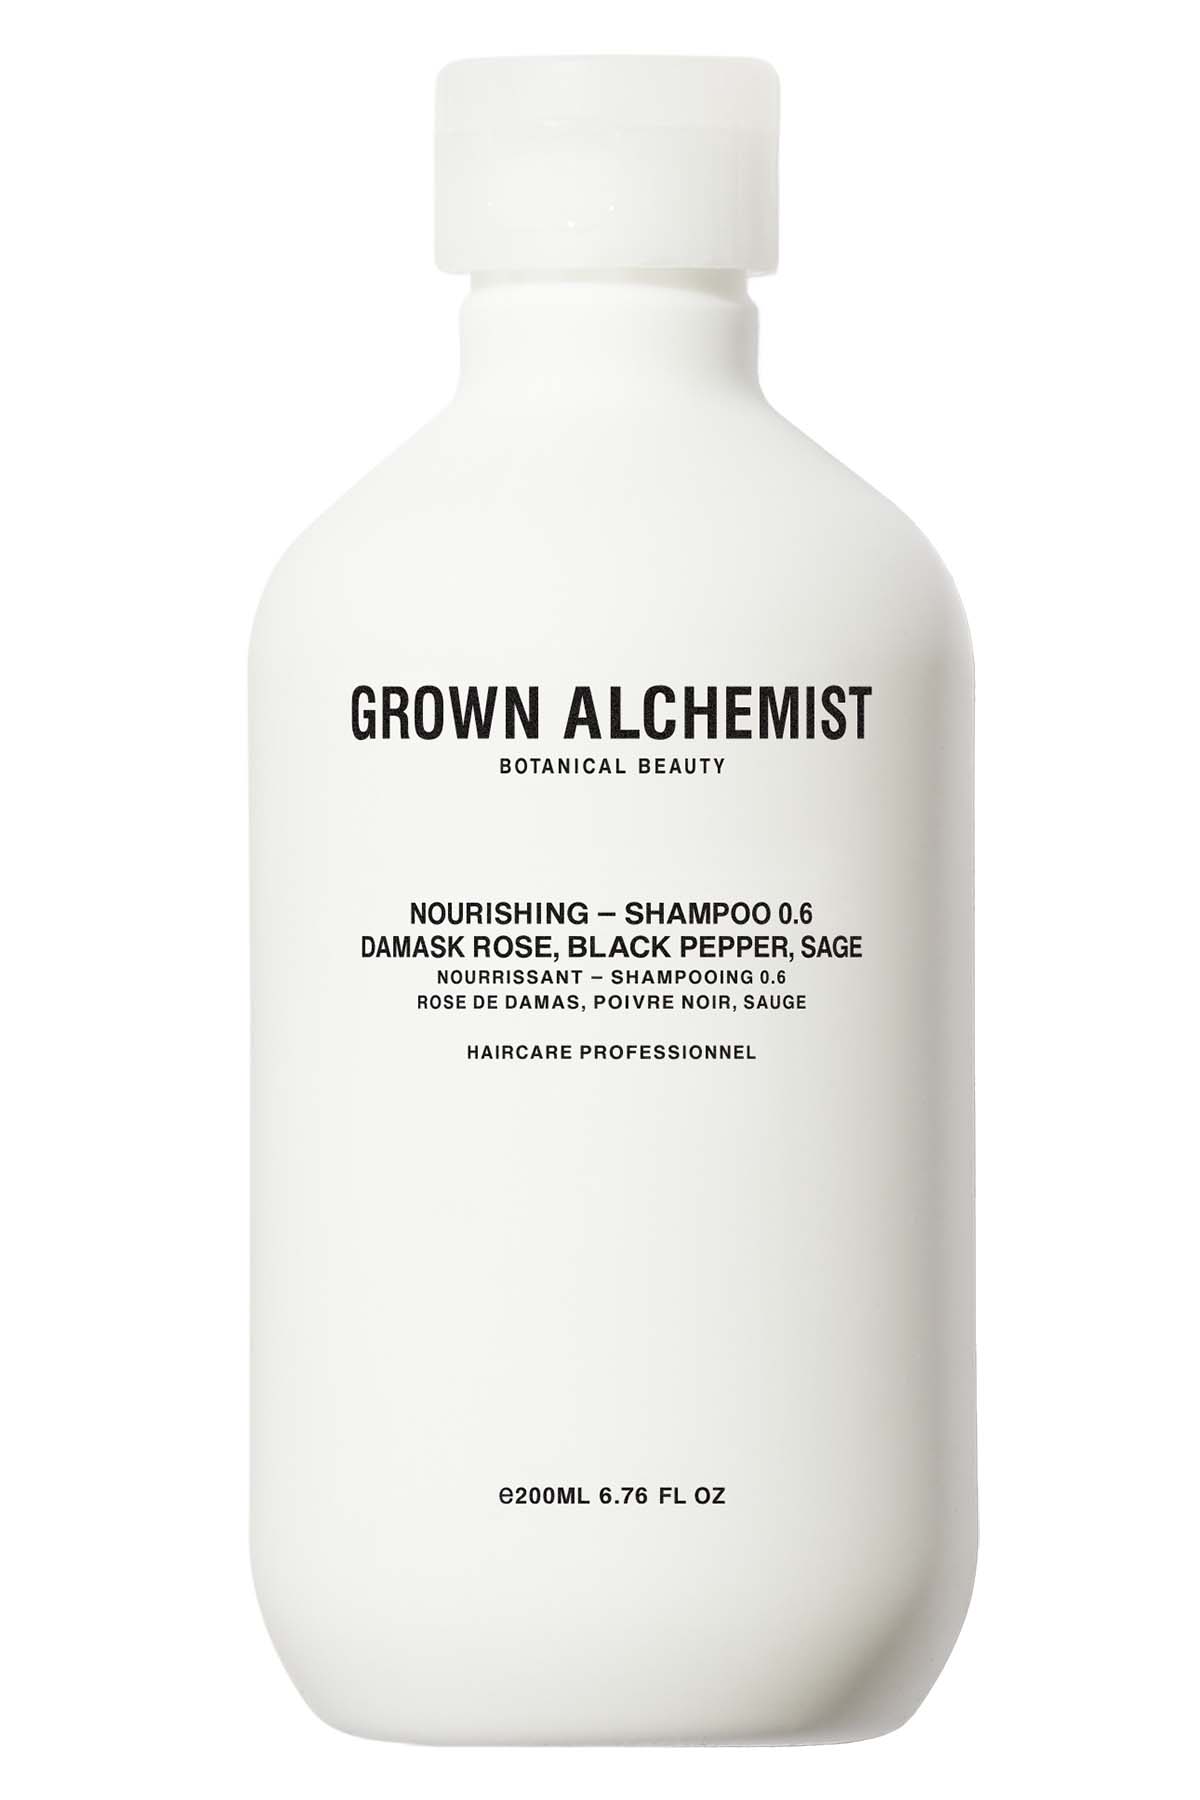 Grown Alchemist Nourishing Shampoo 0.6 Damask Rose, Black Pepper, Sage 200ml